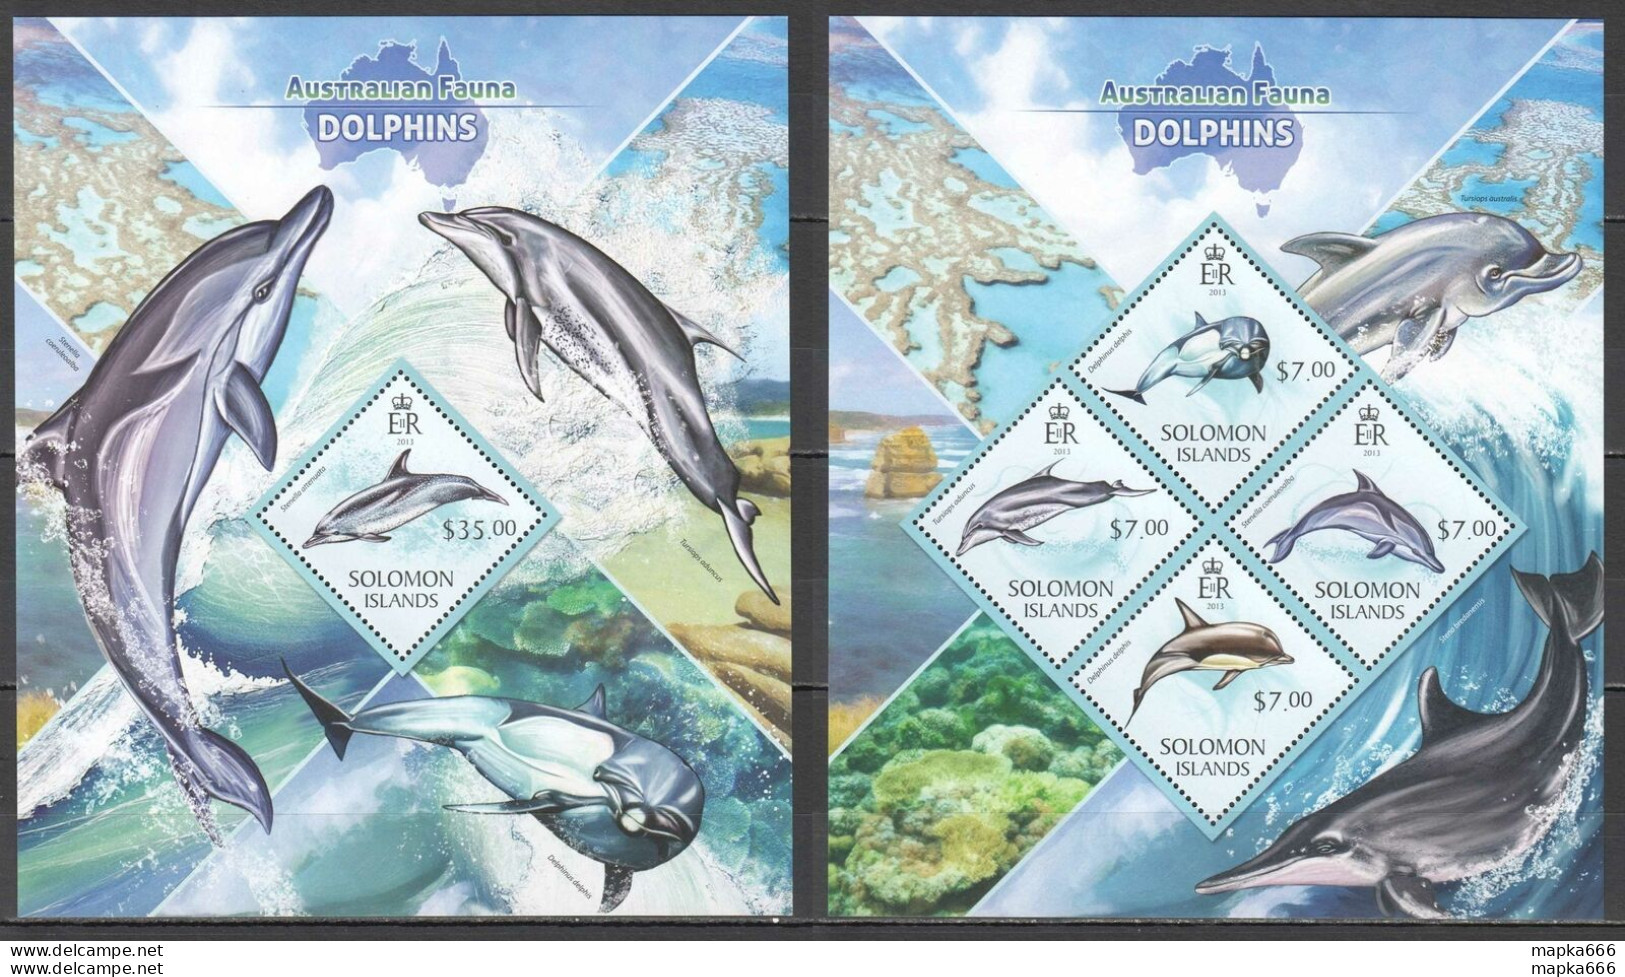 Ls099 2013 Solomon Islands Australian Fauna Dolphins #1991-94 1Kb+1Bl Mnh - Marine Life